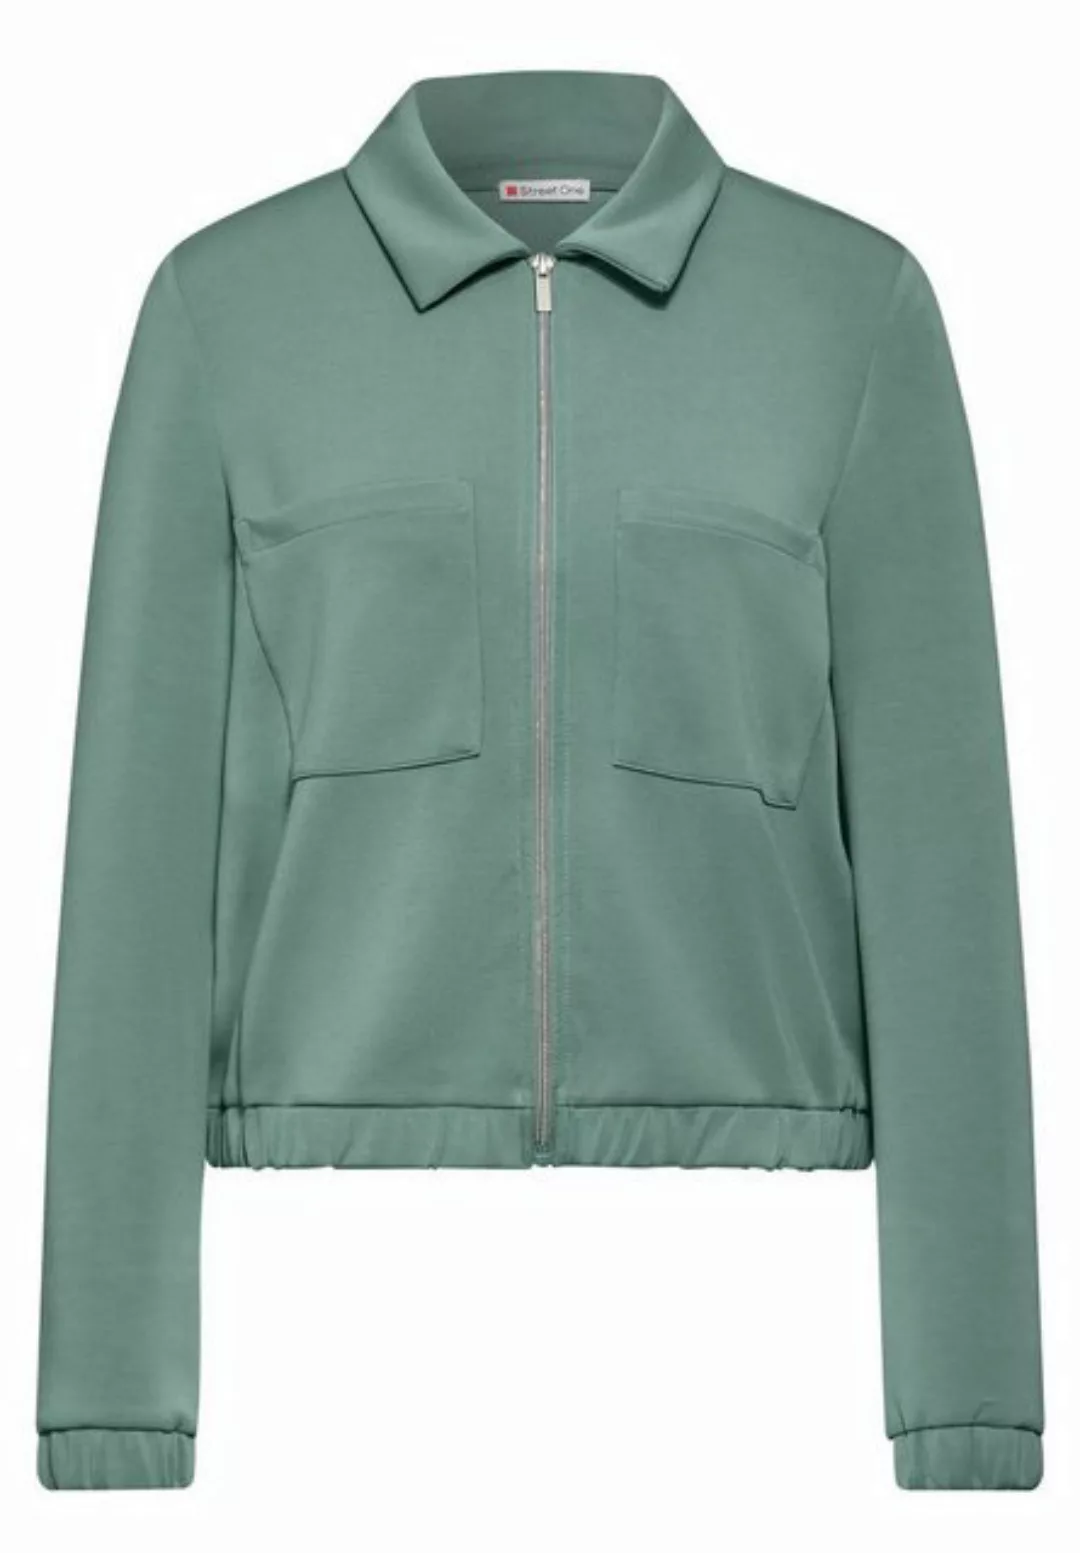 STREET ONE Strickjacke silk look short zipper jacket, seafoam green günstig online kaufen